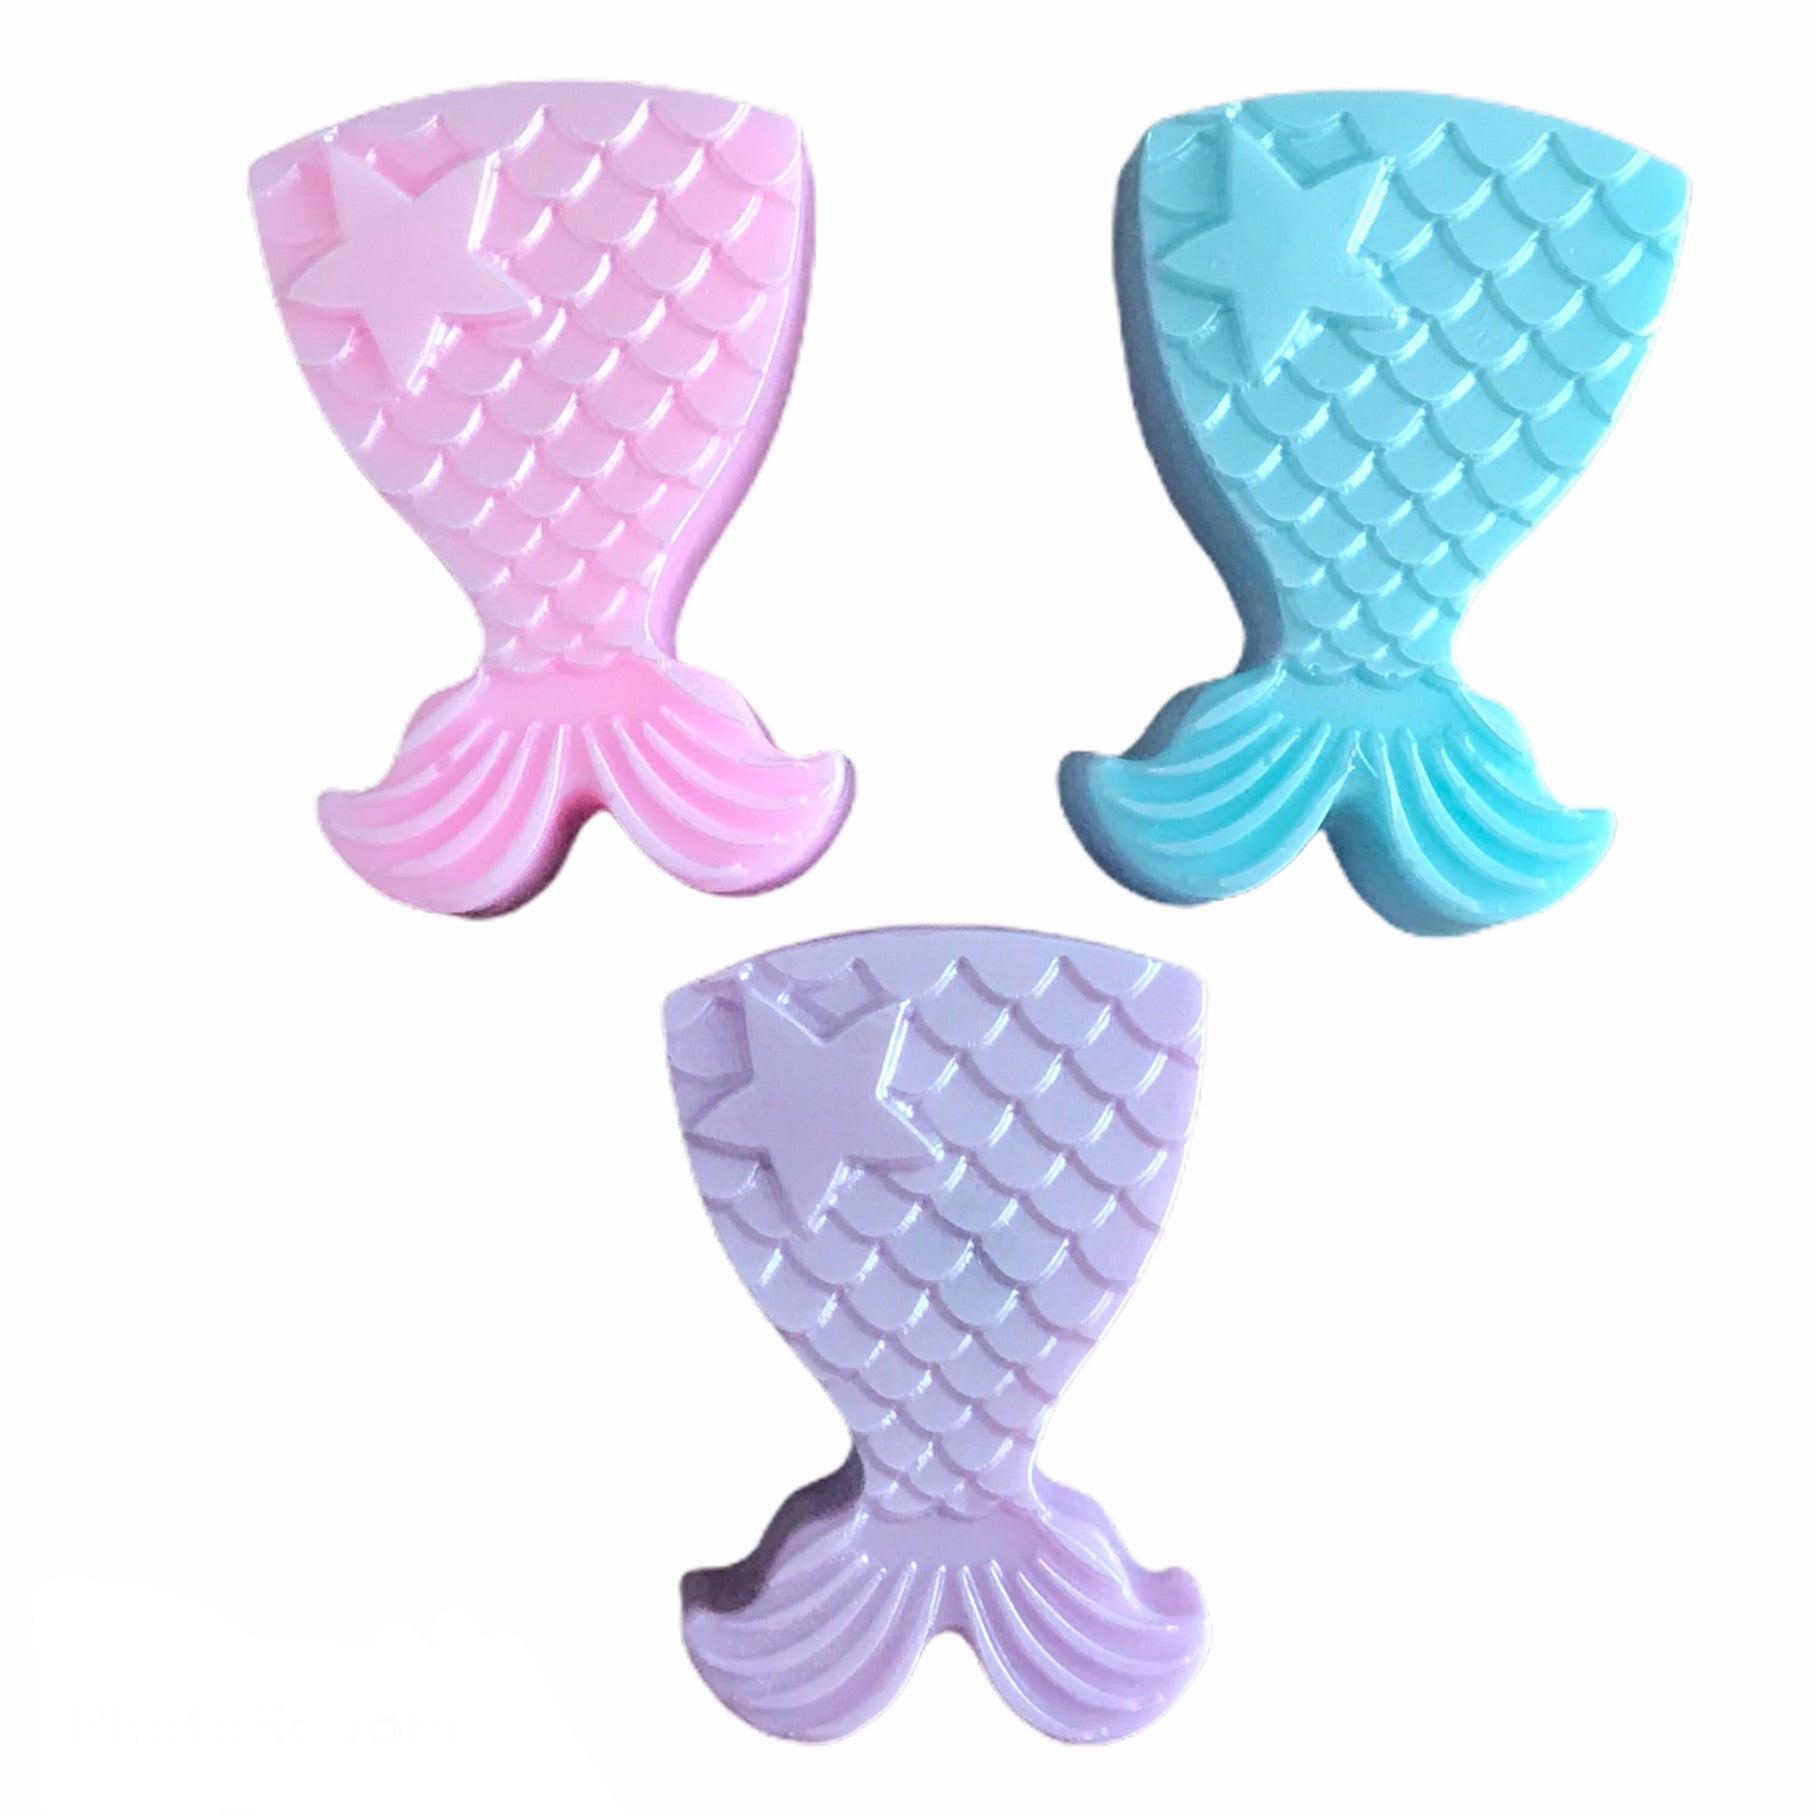 Mermaid Tail Soap